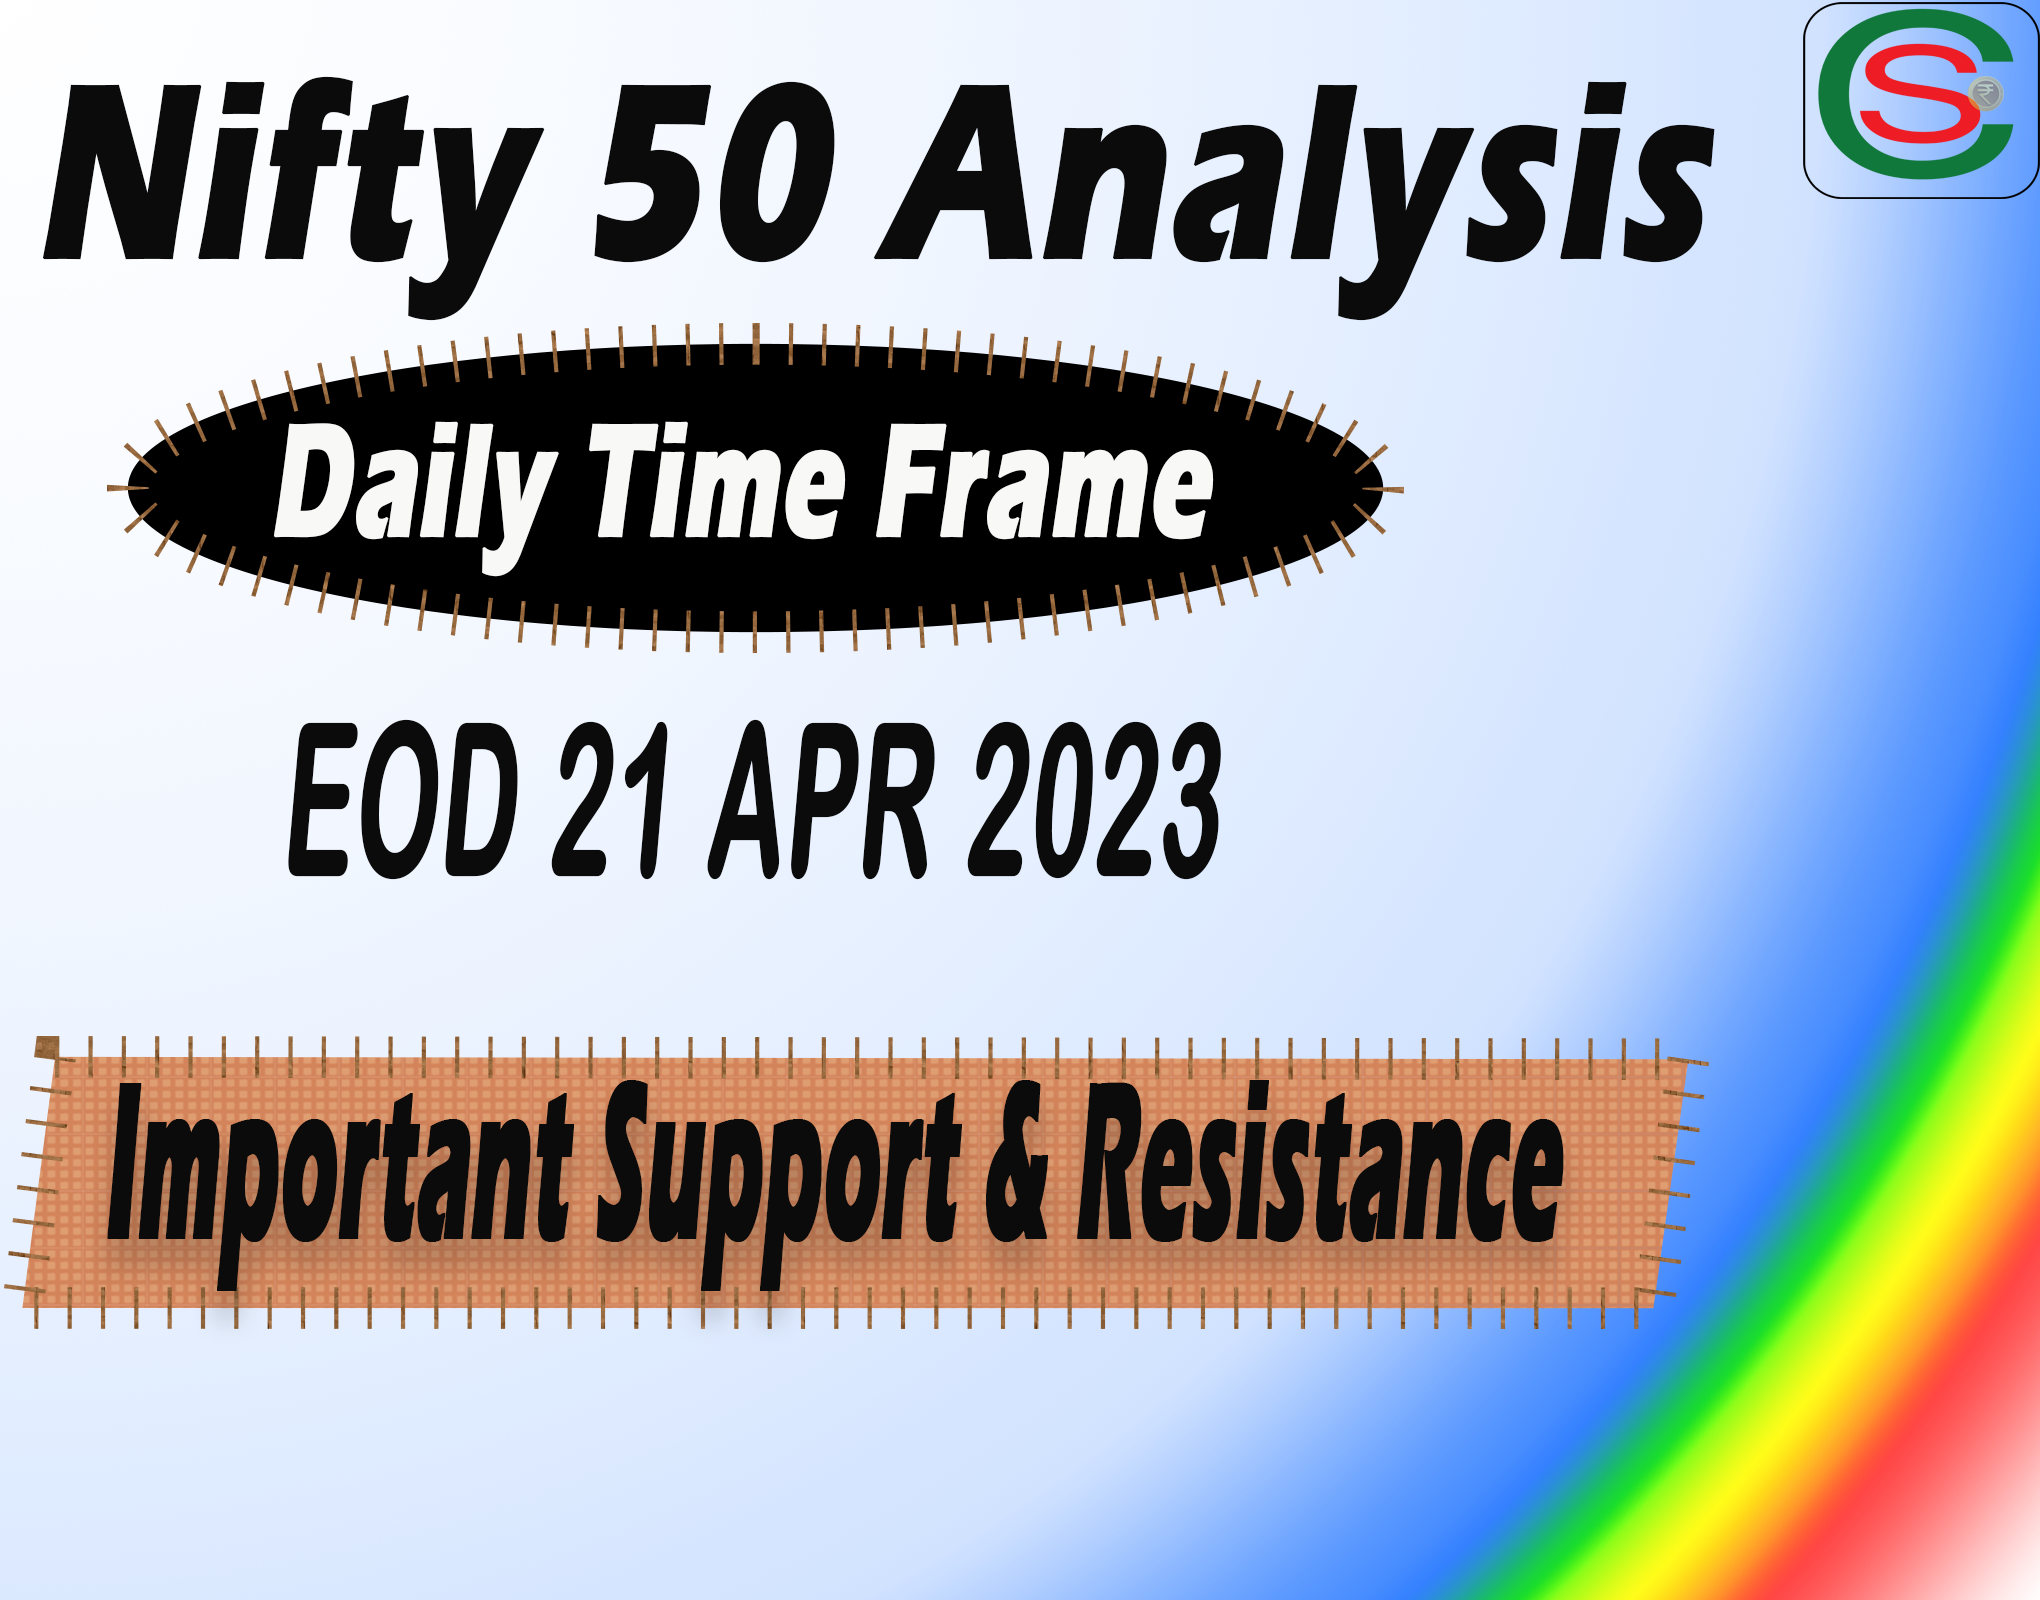 Nifty 50 Analysis